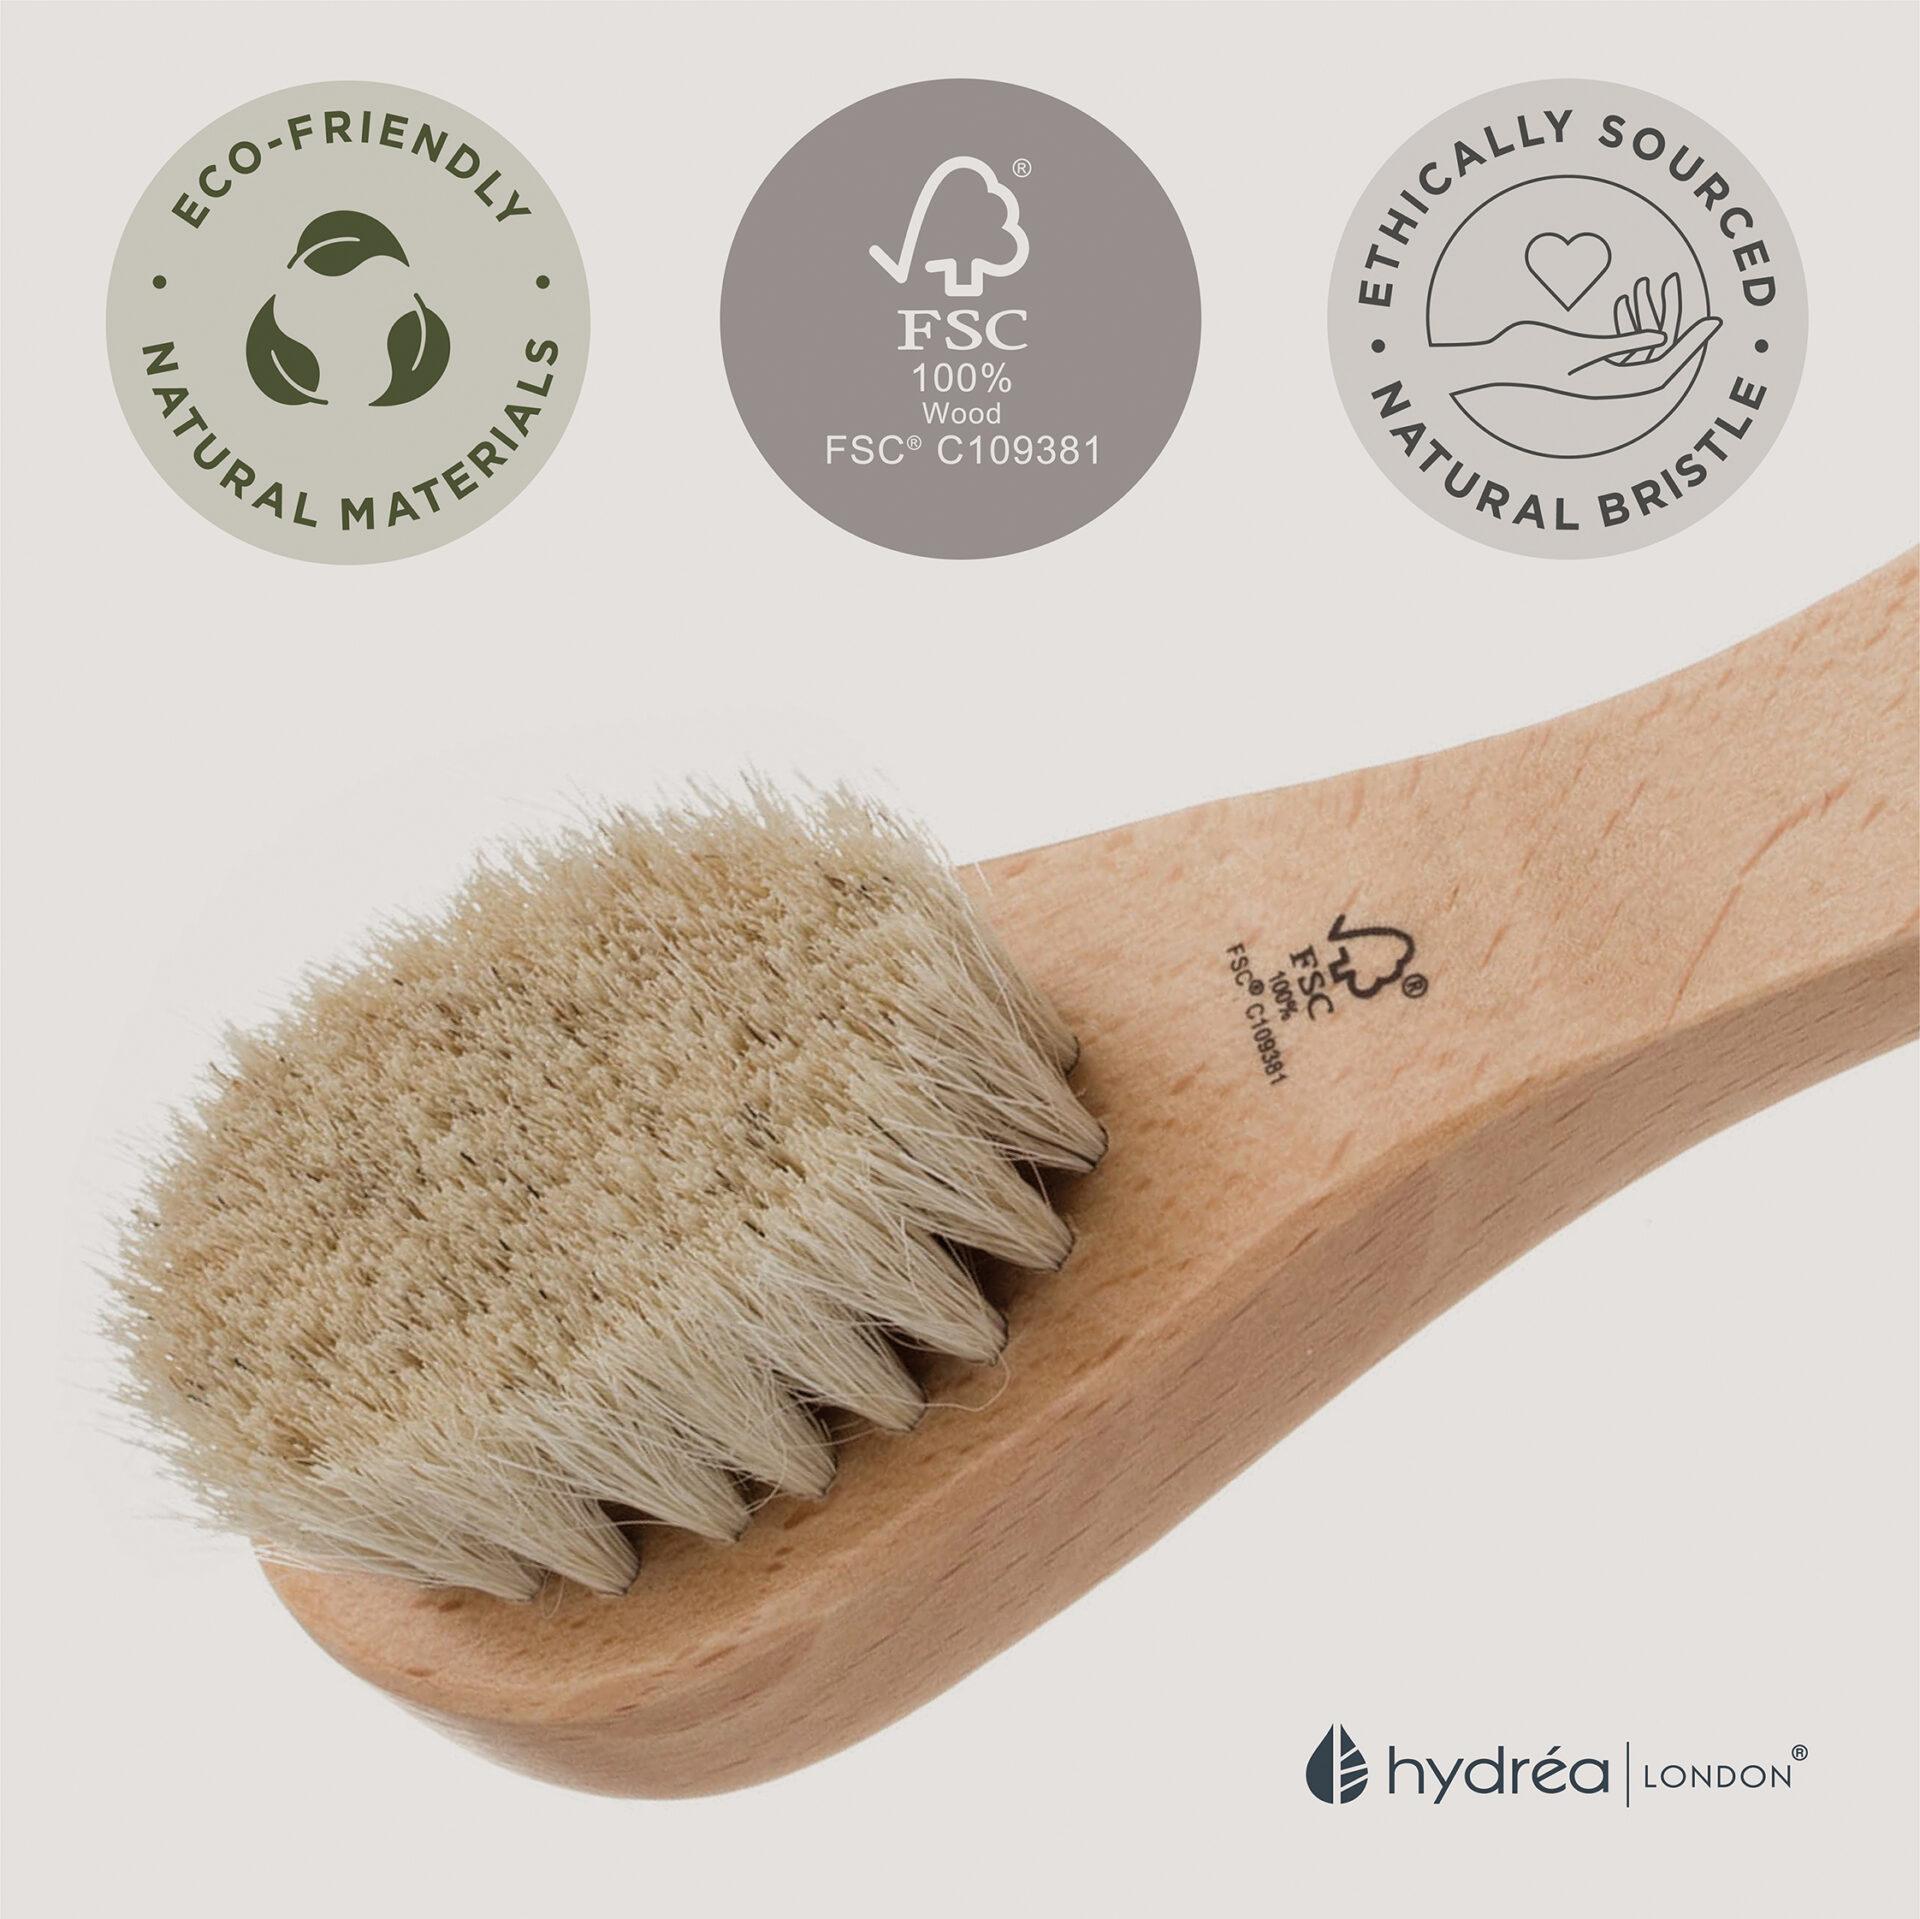 Eco-Friendly Facial Brush with Pure Bristles - APTIVA